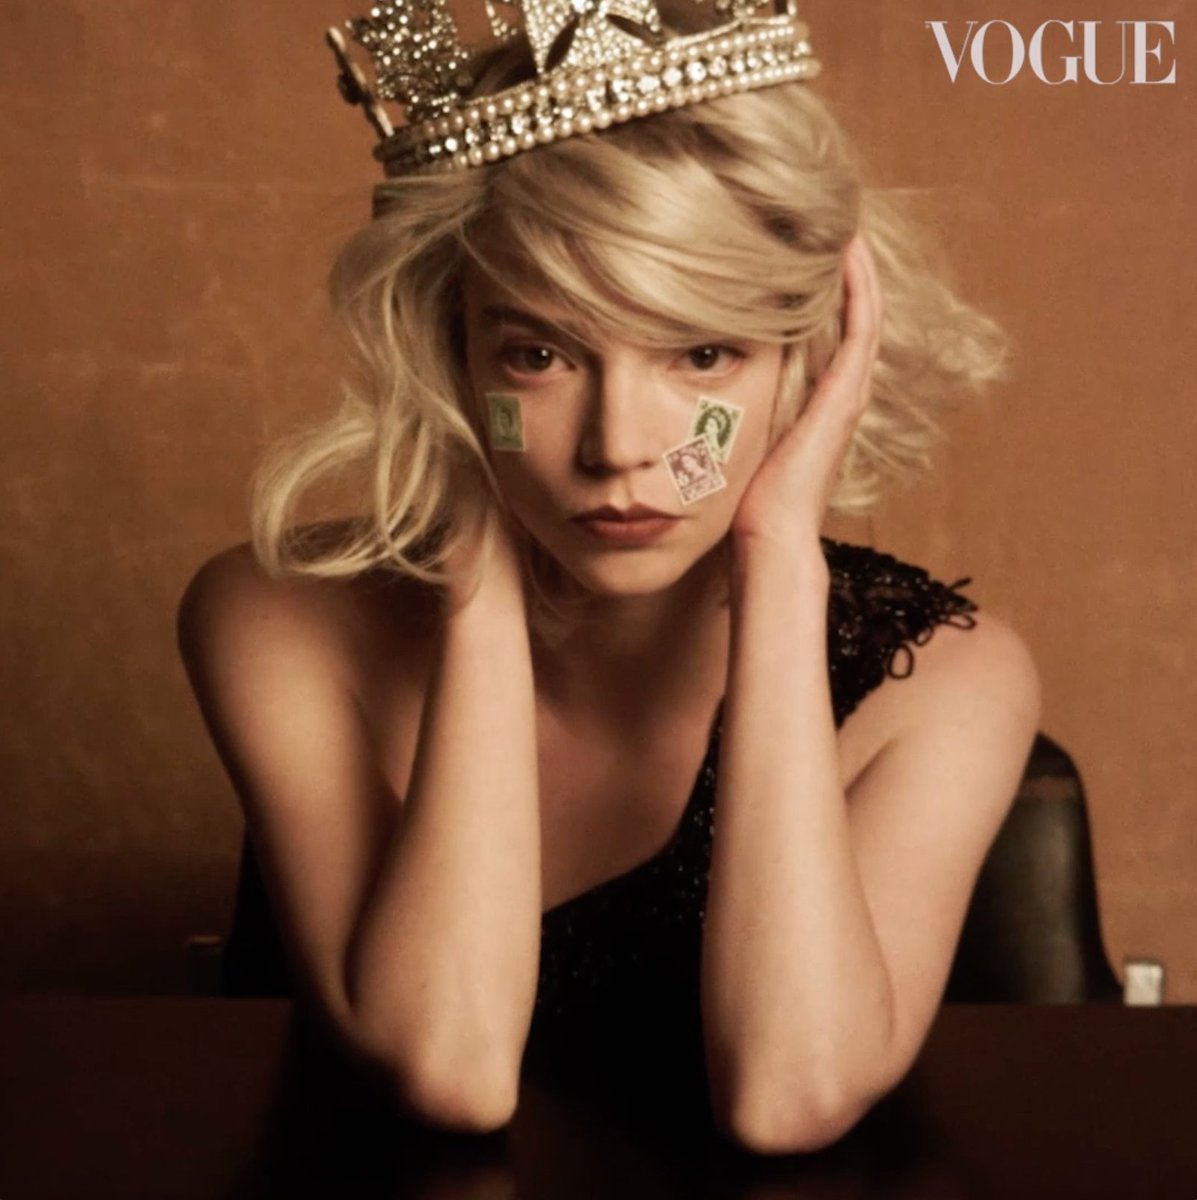 Anya Taylor-Joy's Vogue Interview: Romance, Raving & Rebellion